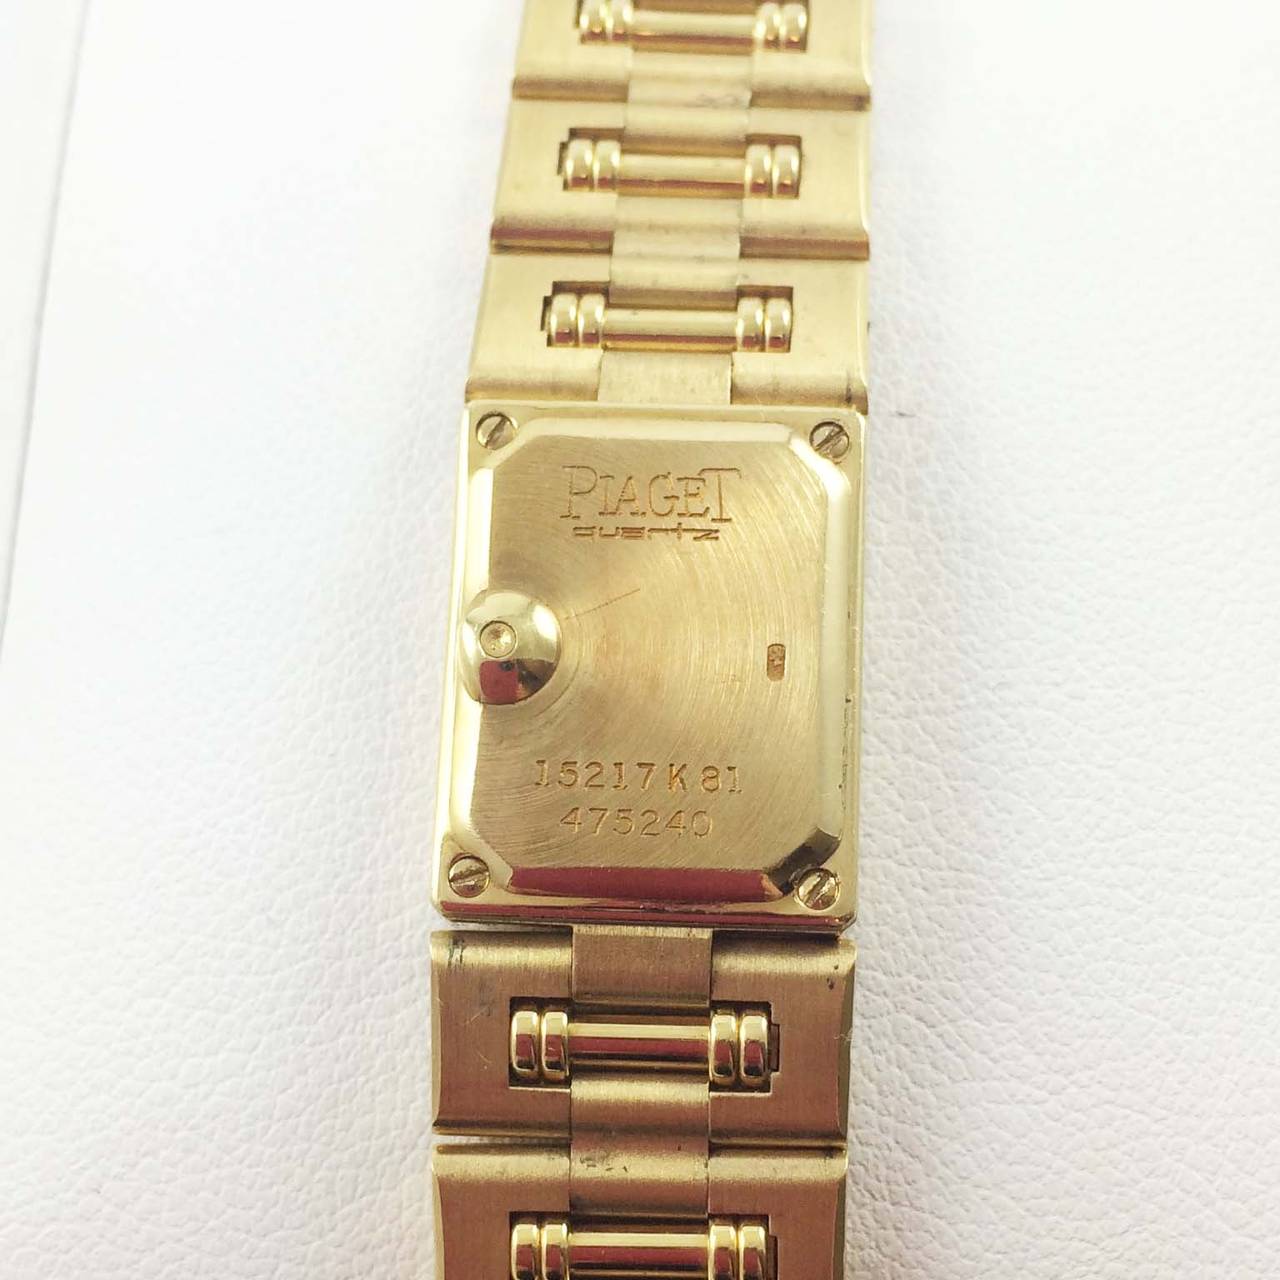 Piaget 18K yellow gold mini square Dancer bracelet watch, gold dial, quartz movement.
New in box
Never worn
Original two year warranty